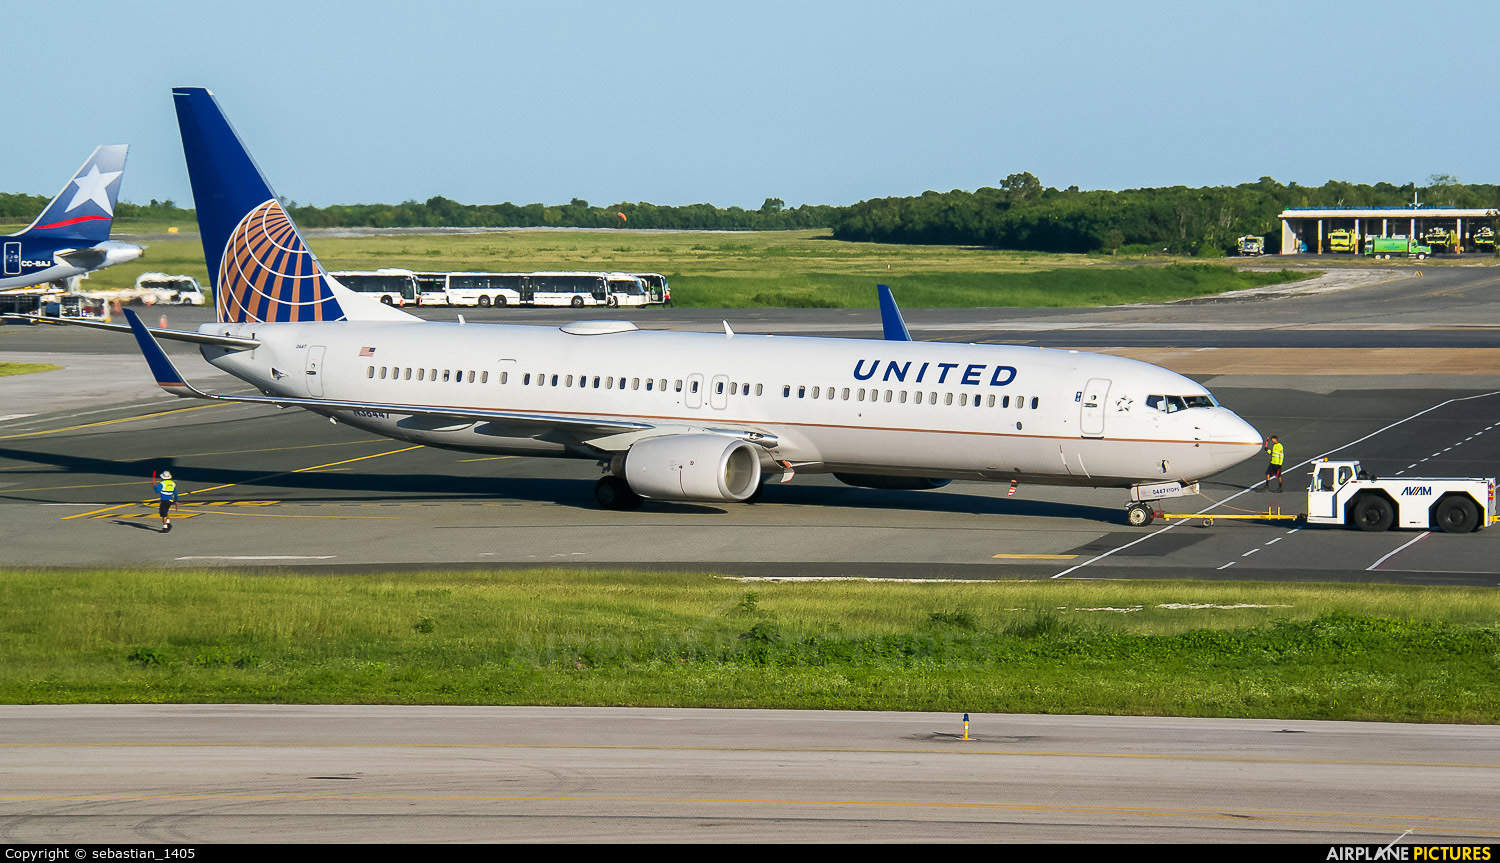 Flight Attendant at United Airlines voluntarily deploys emergency slide…